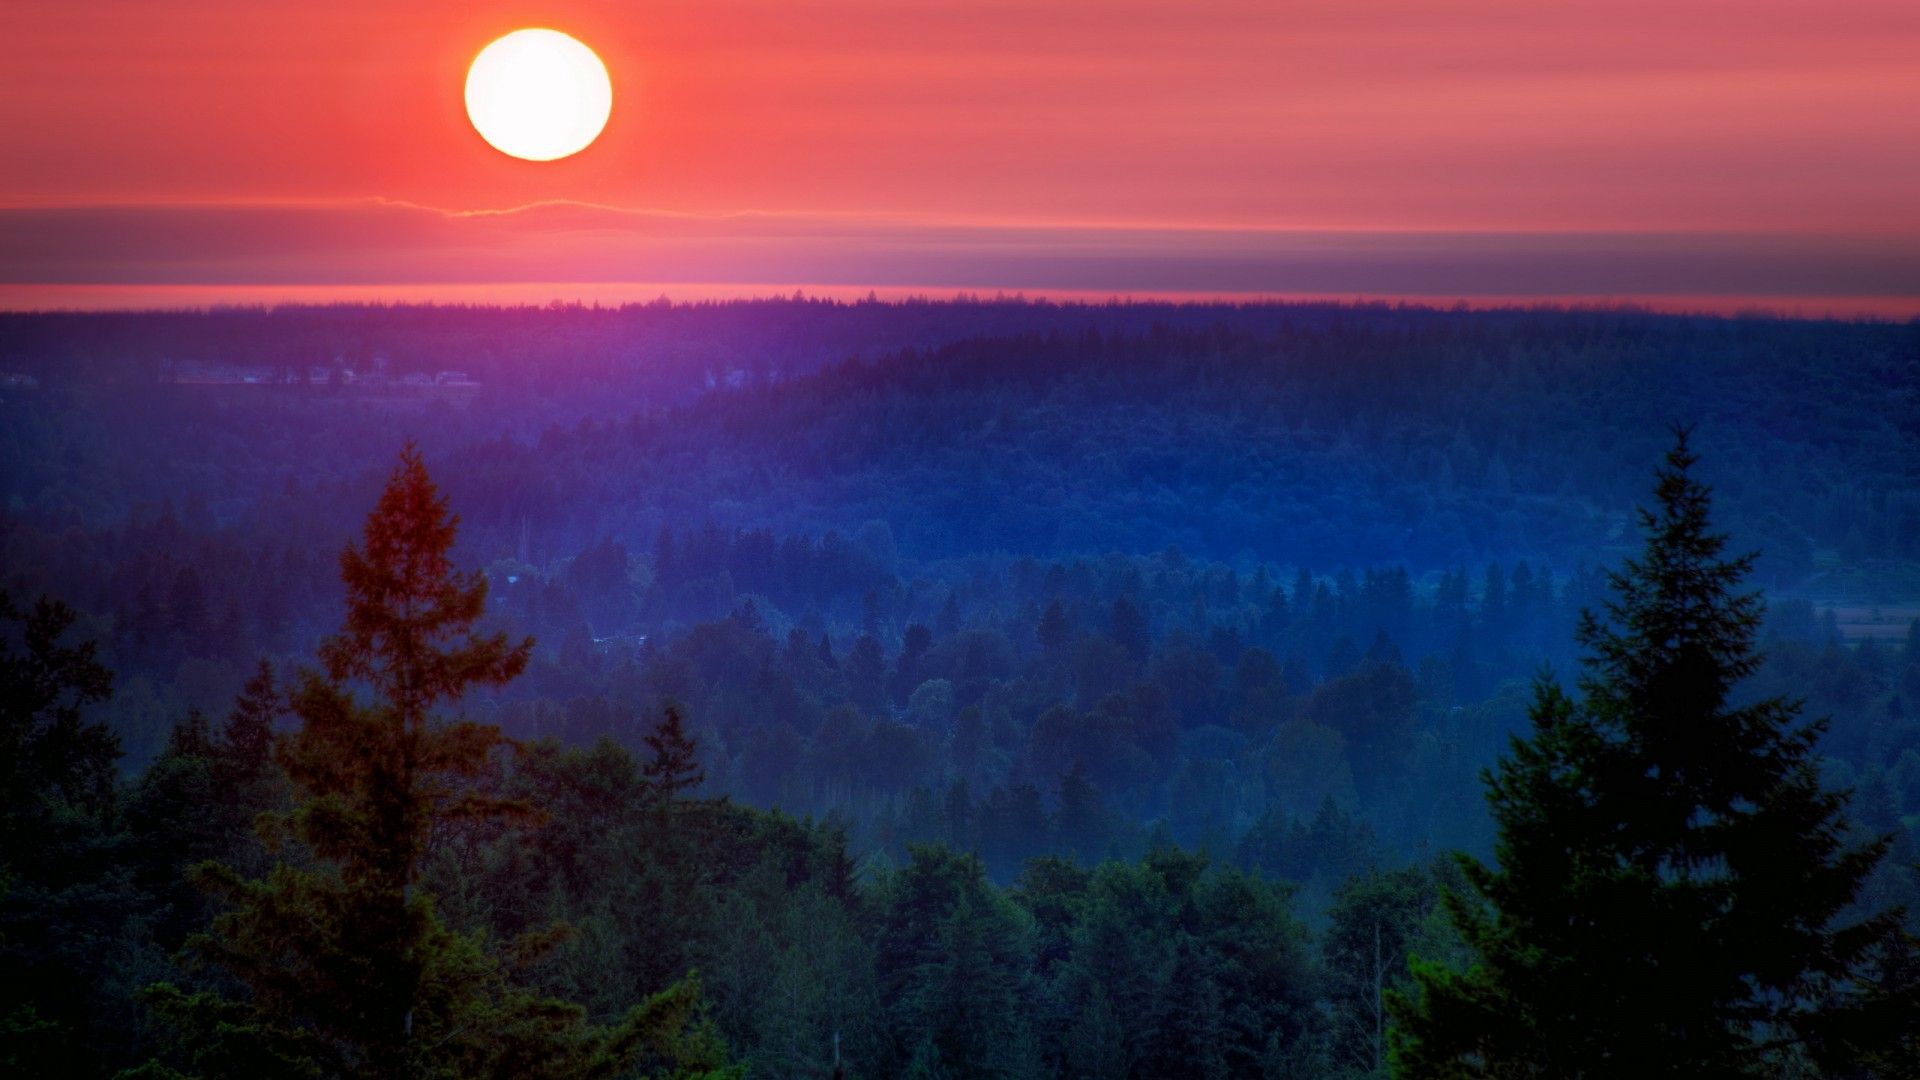 Sunset Forest Images - Free Download on Freepik